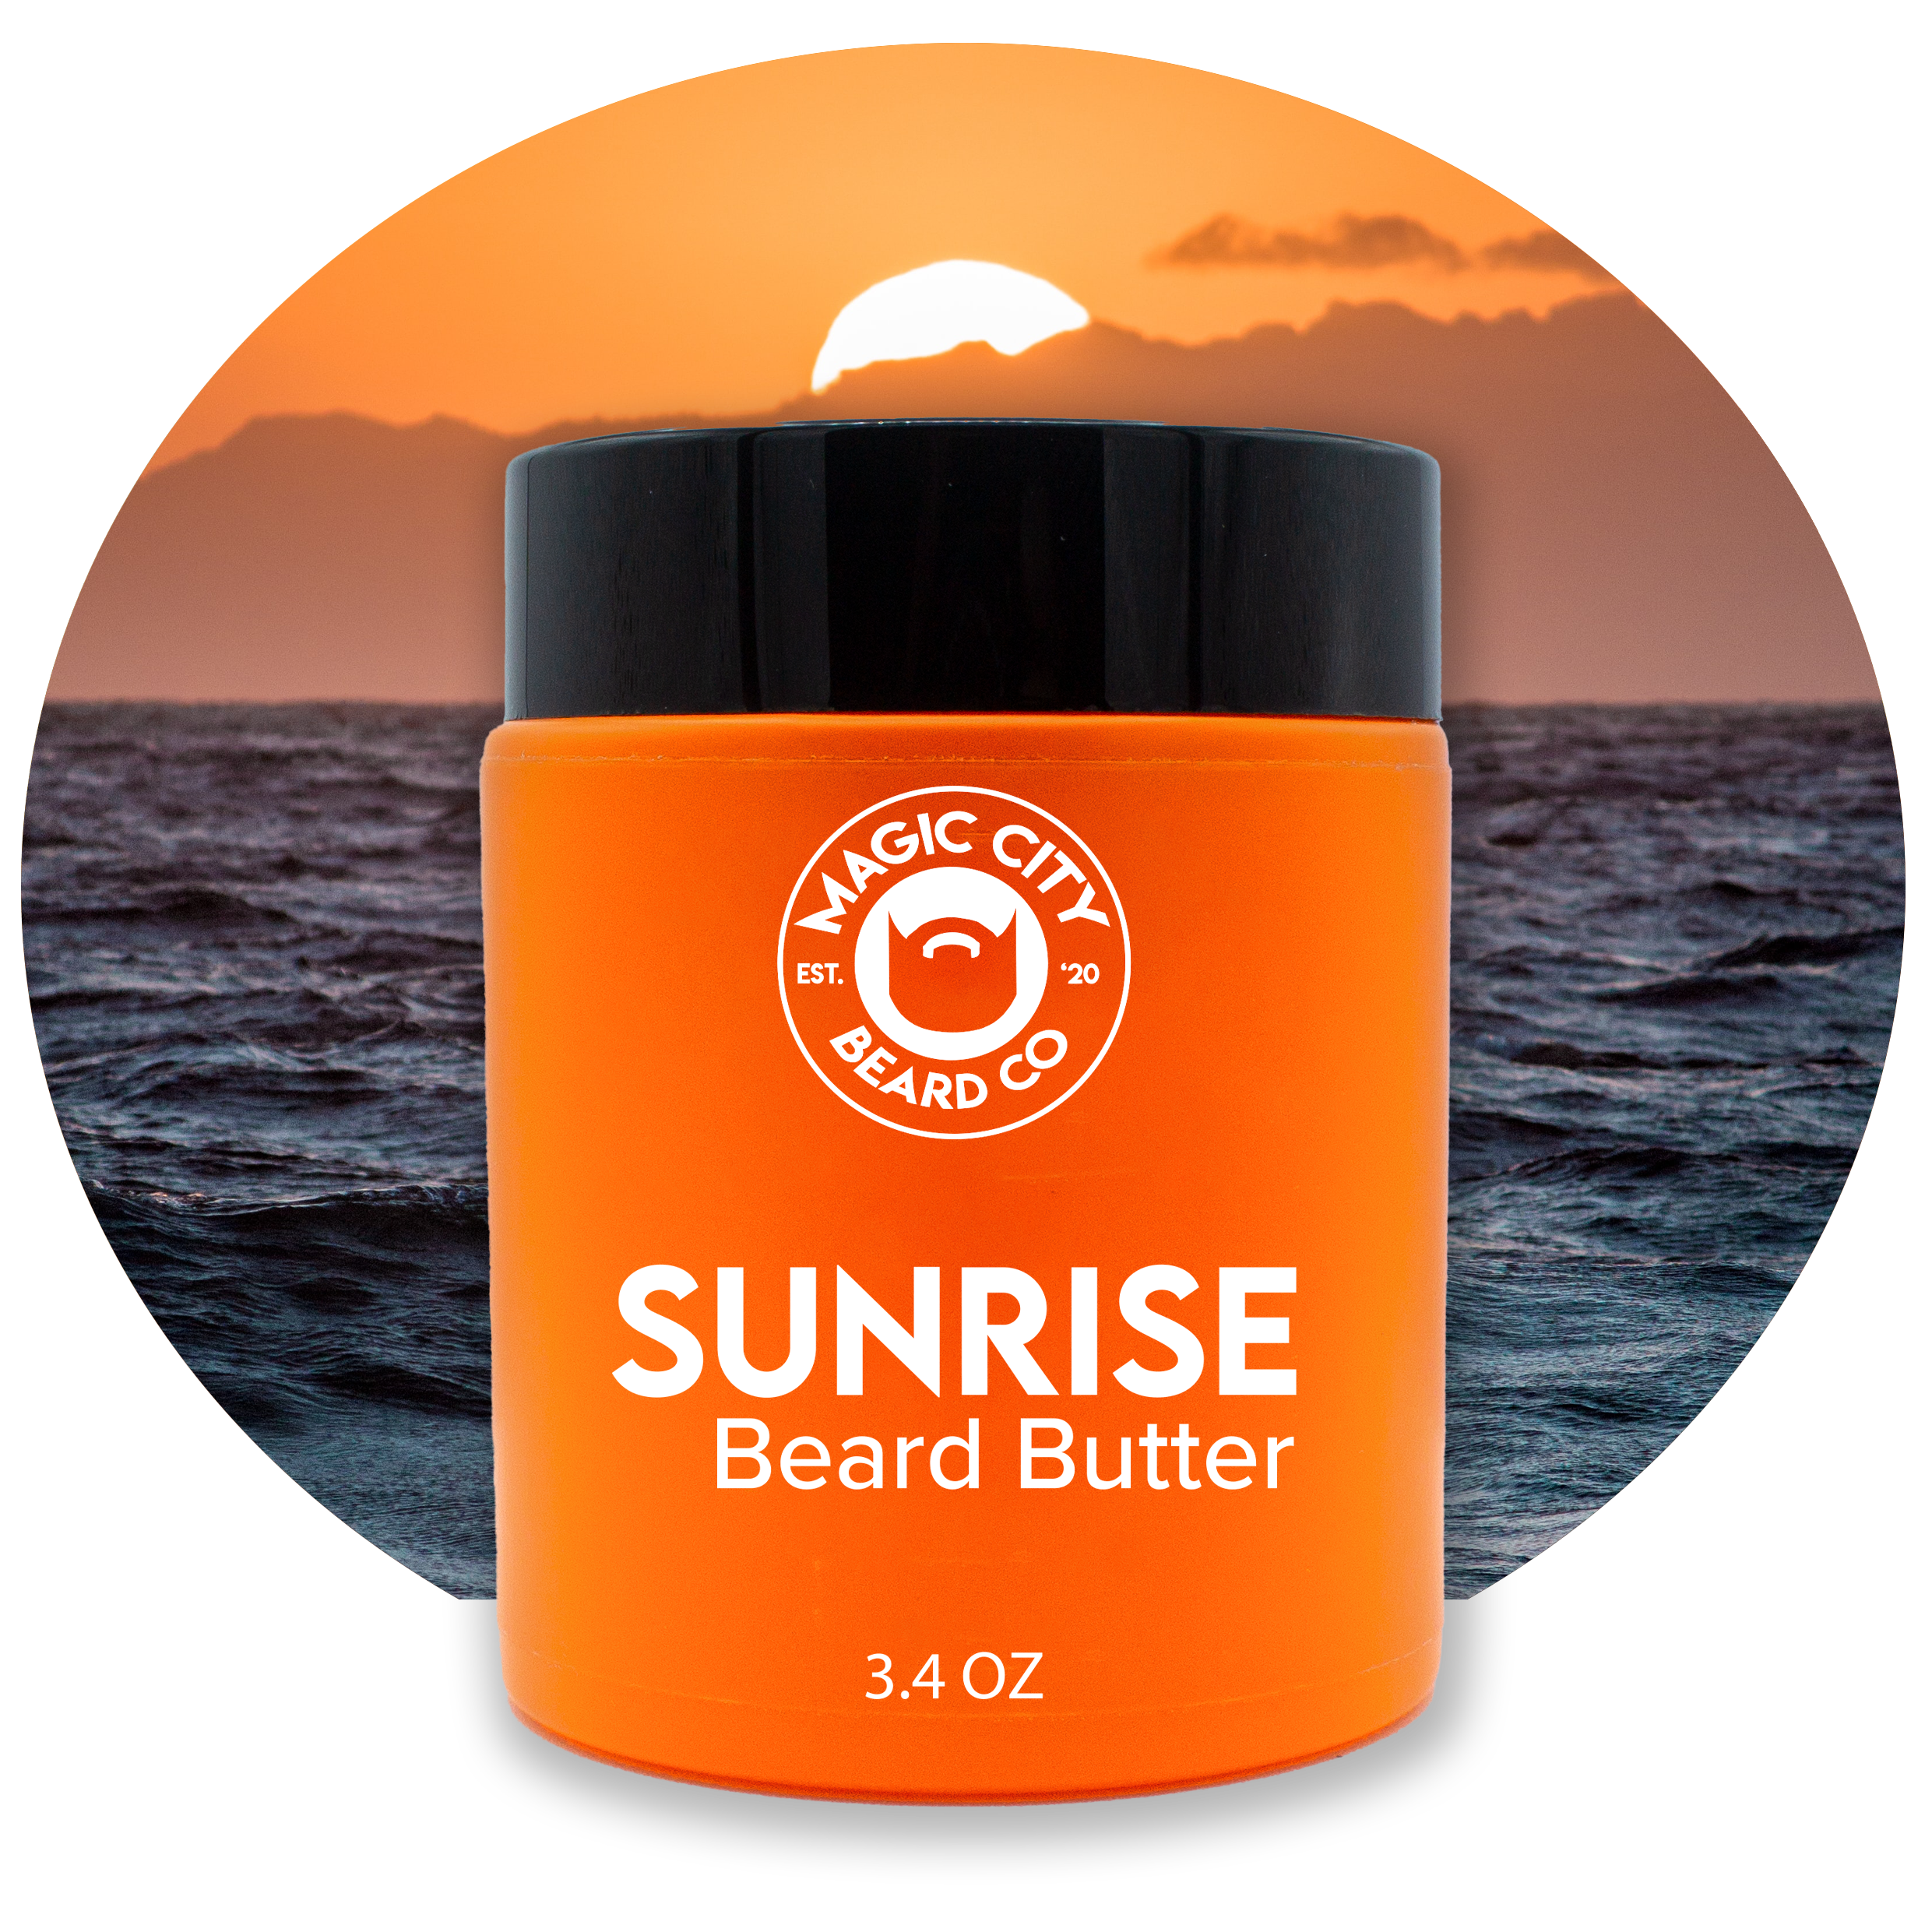 Sunrise Beard Butter